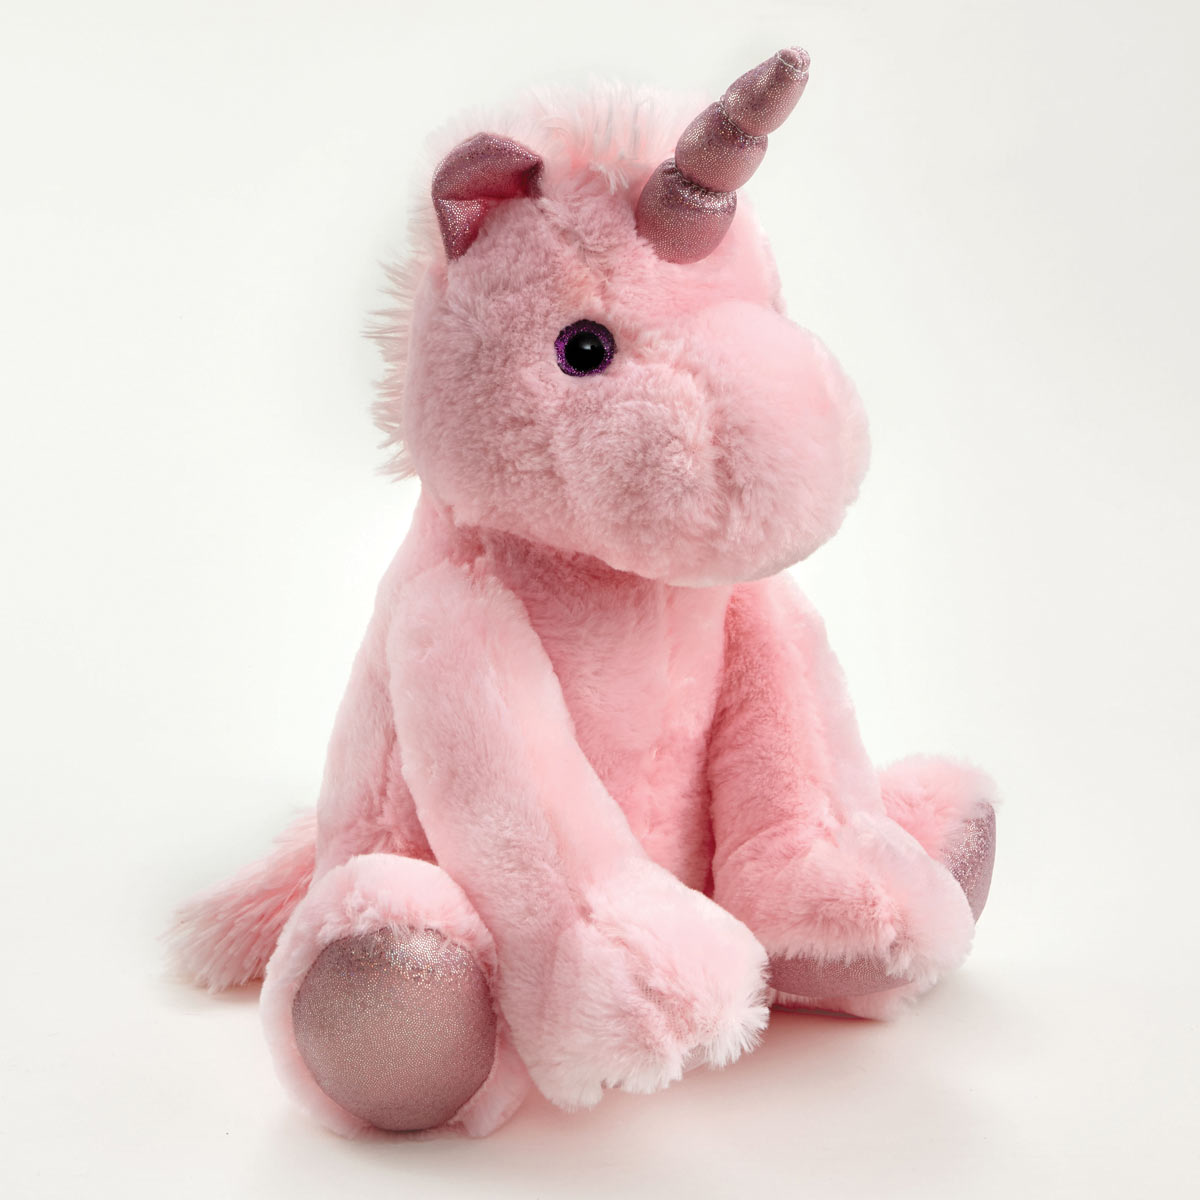 Snuggle Buddies 35cm Unicorn Plush Toy (Styles Vary)